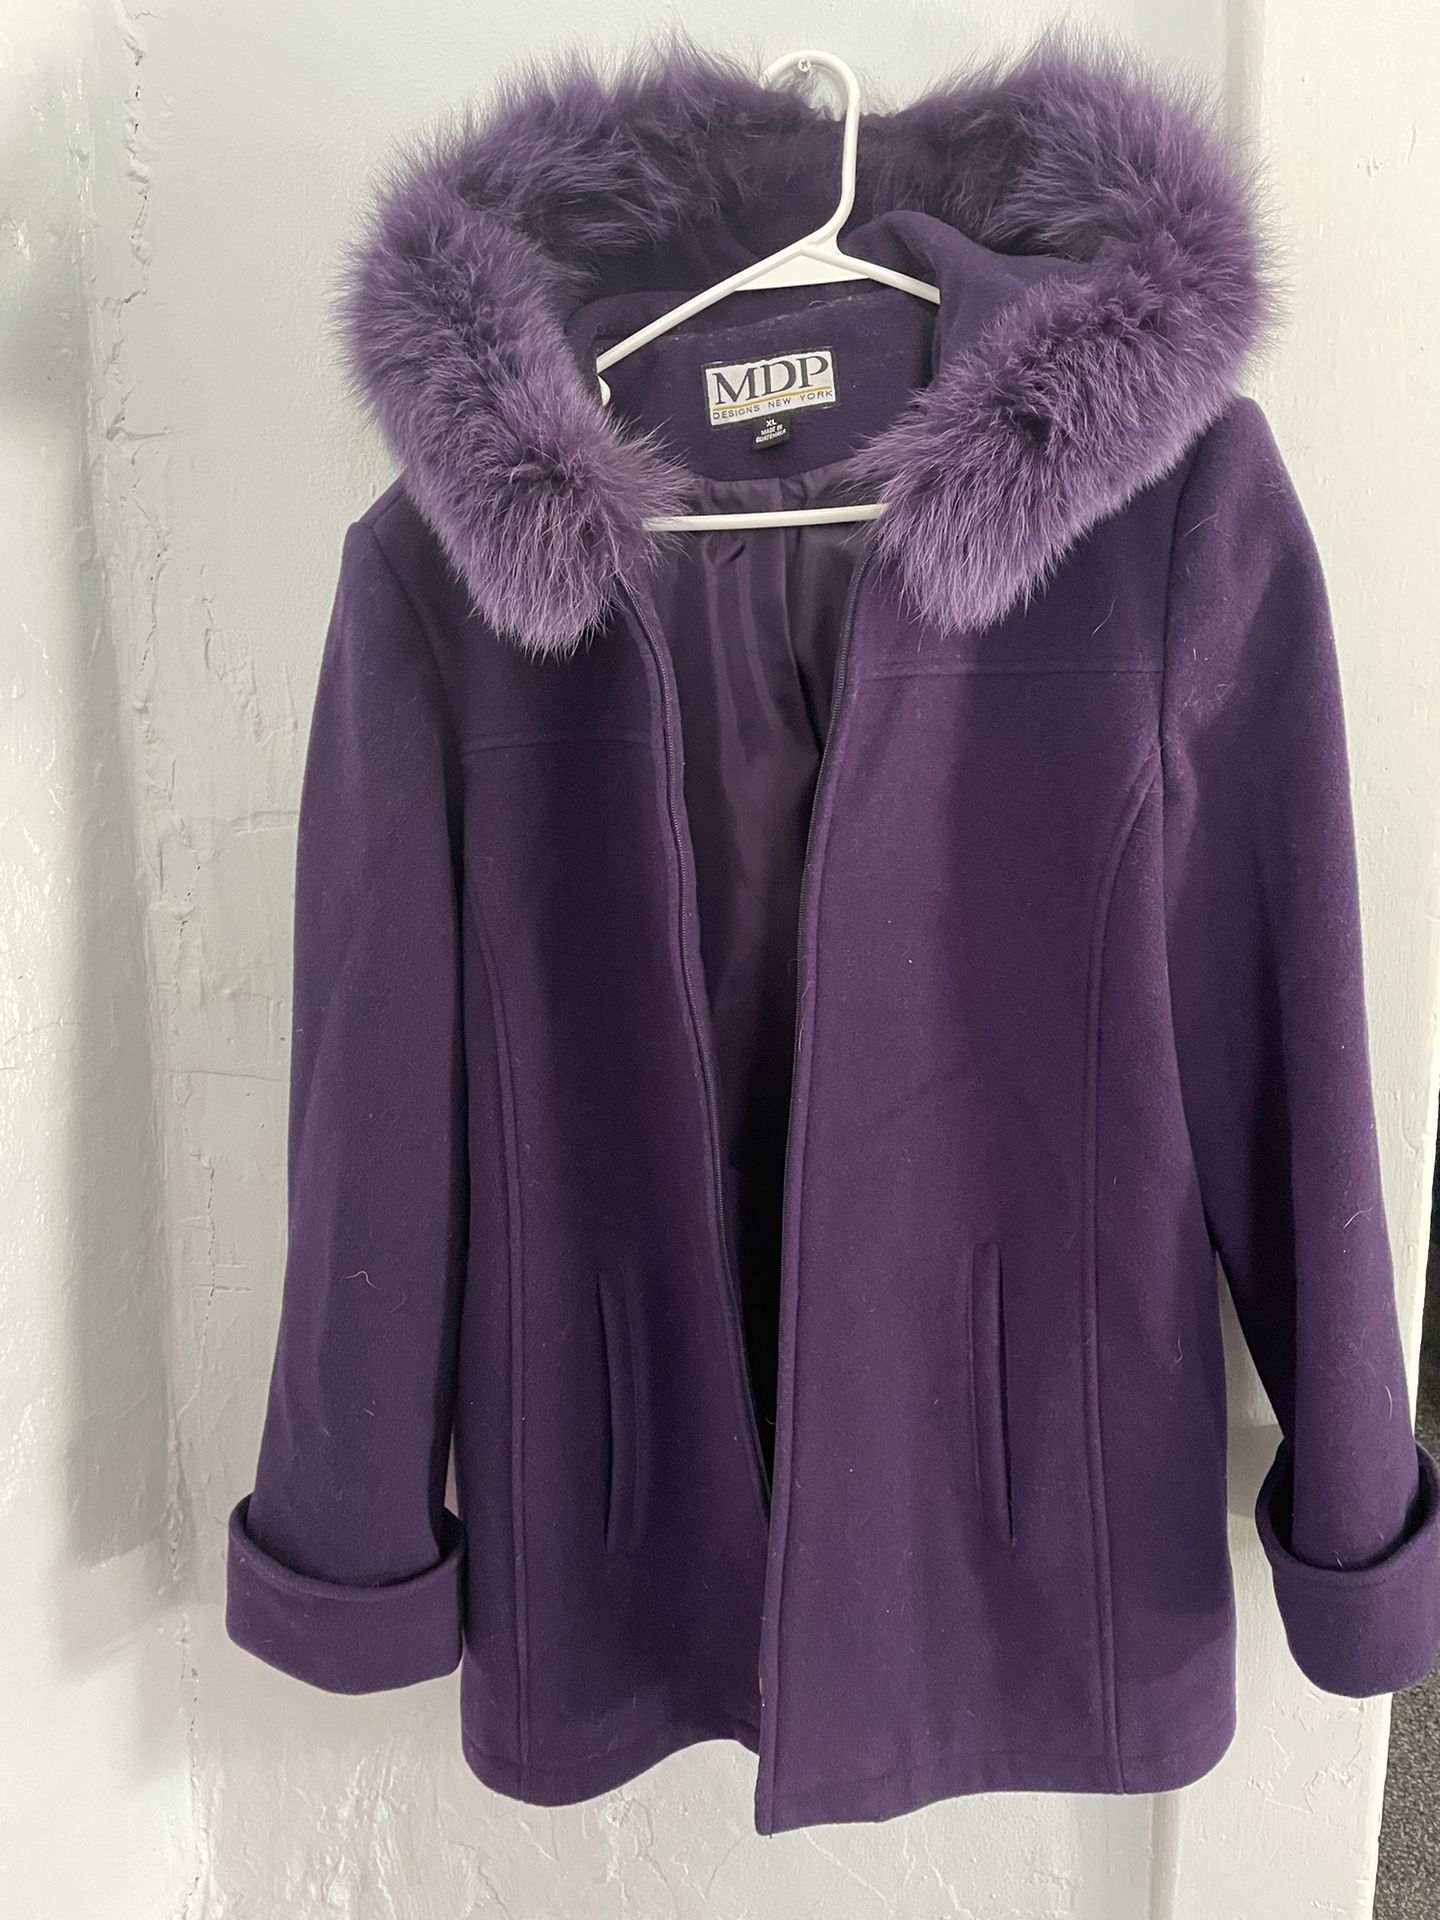 Women’s Xl Name Brand Winter Coat